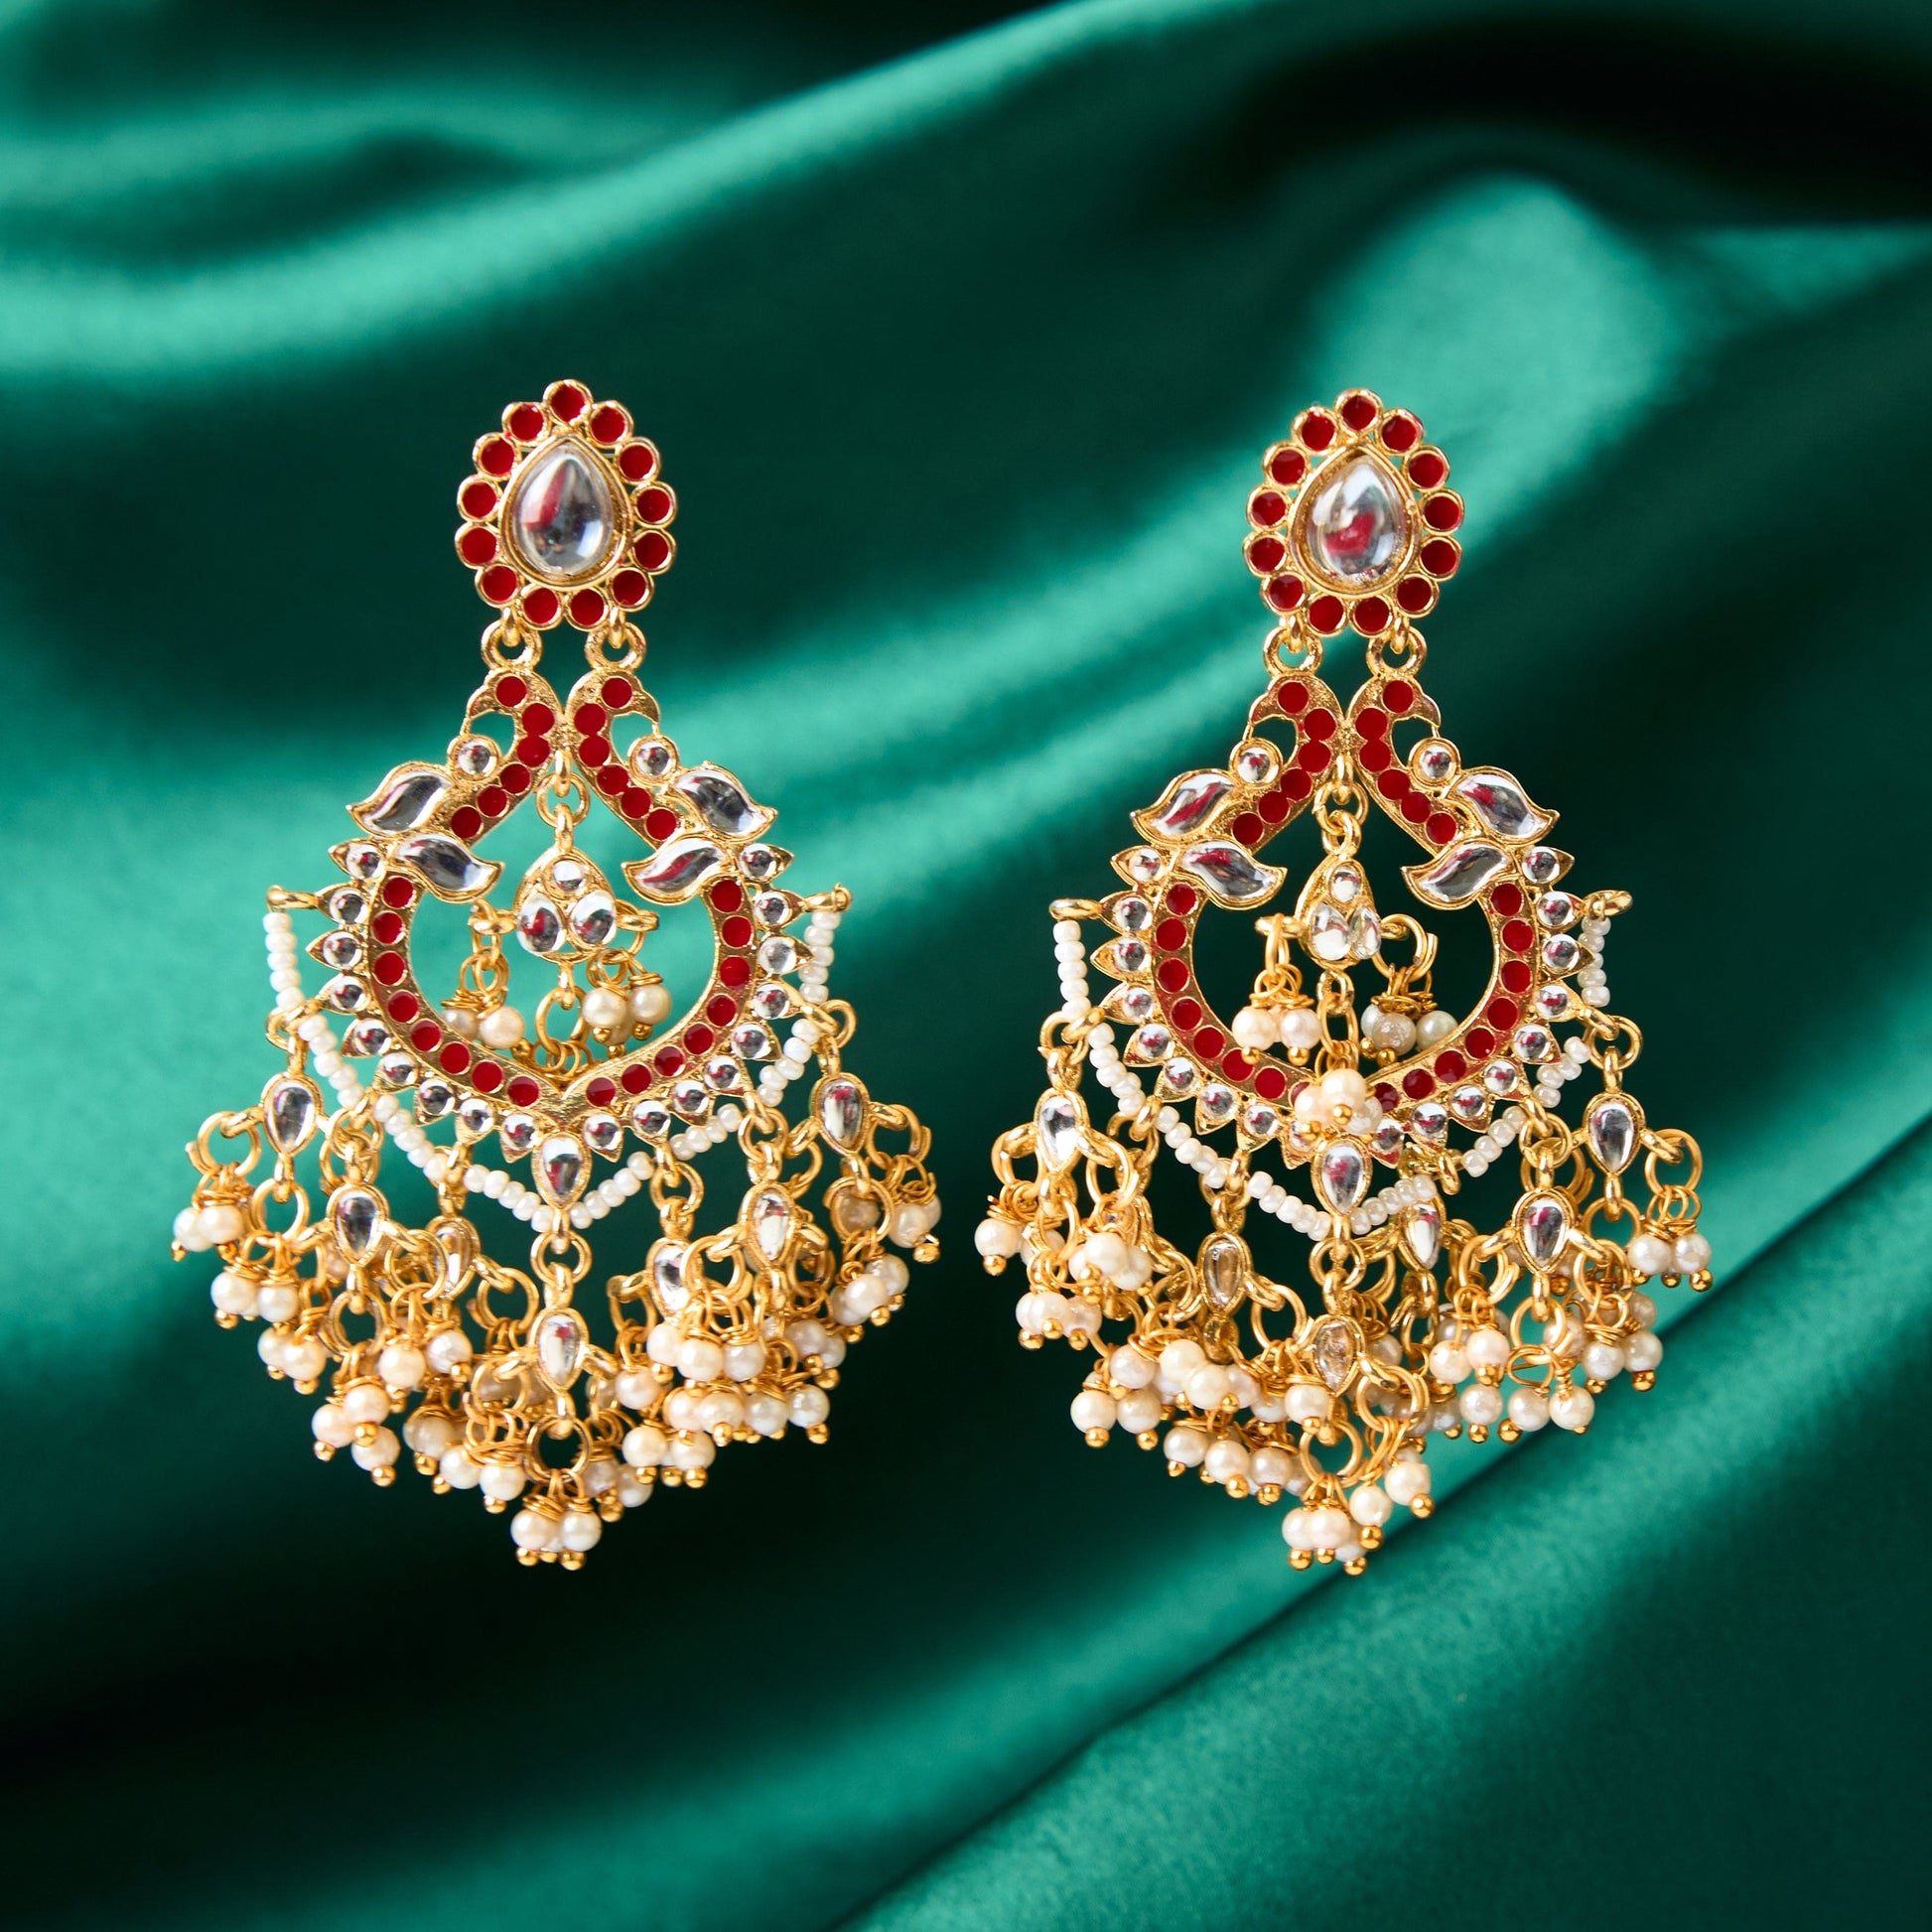 Moonstruck Golden/Gold Chandbali/Bali Dangle Earrings with Kundan & Pearls - Elevate Your Ethnic Indian Glamour look for Women & Girls - www.MoonstruckINC.com